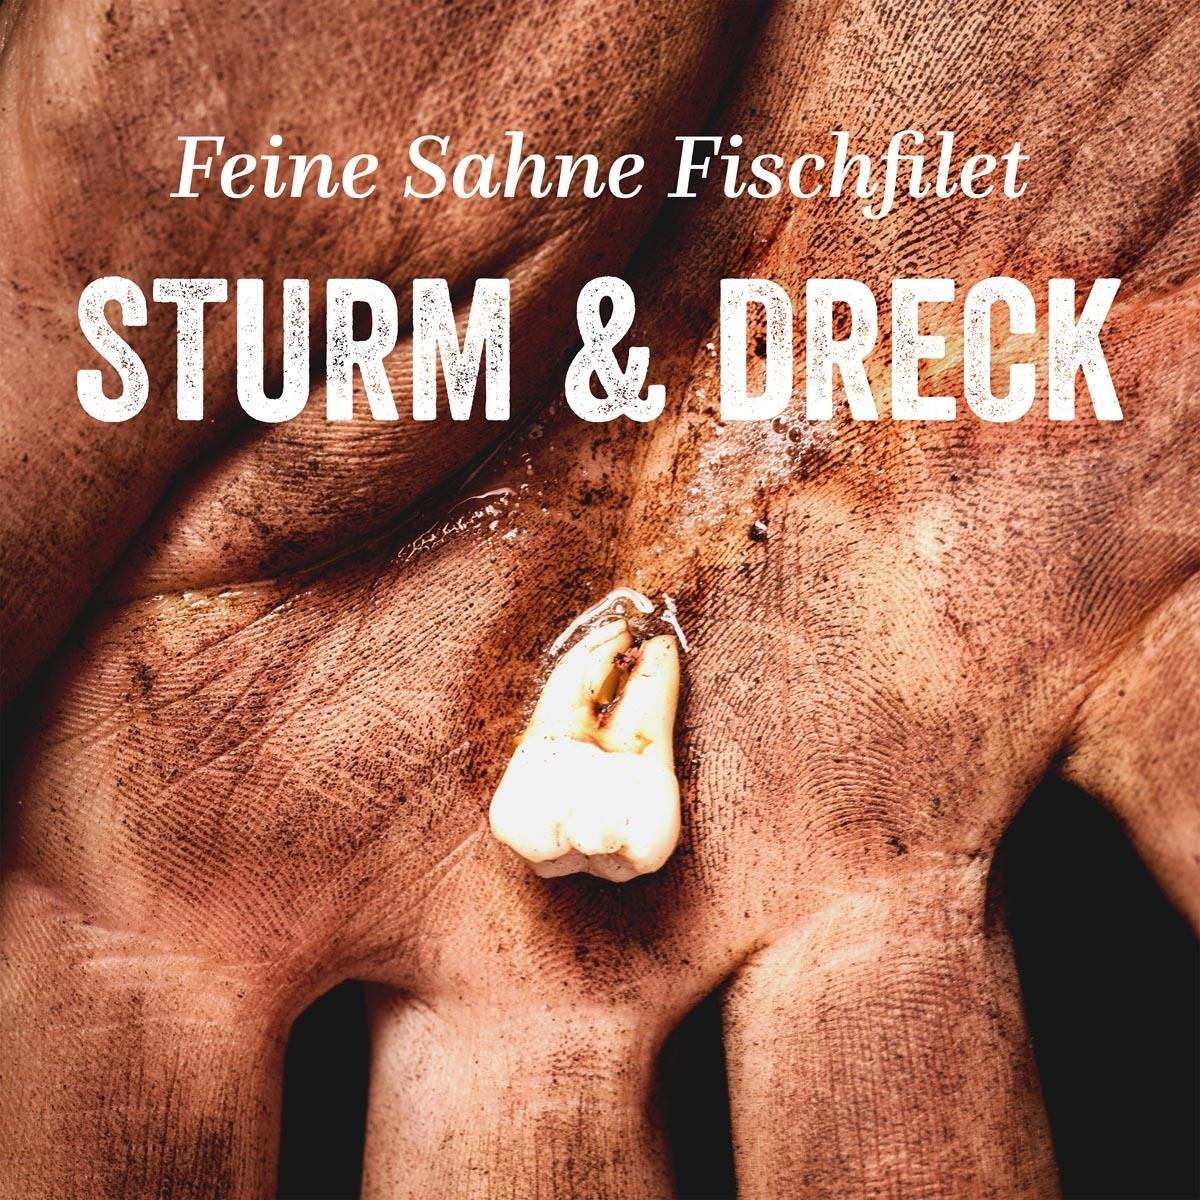 Feine Sahne Fischfilet - Sturm & Dreck (Album Cover)